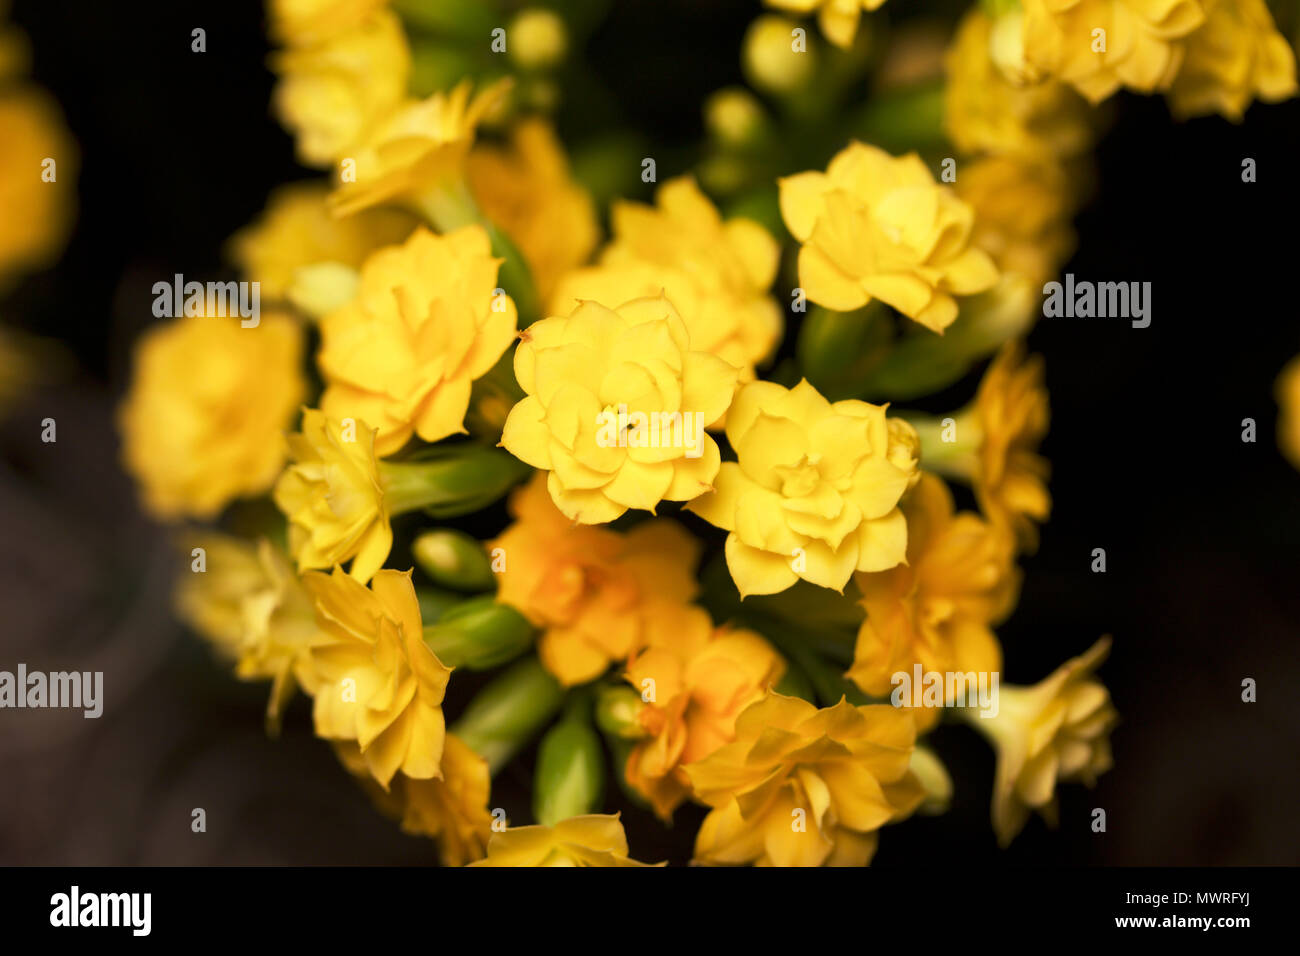 Macro view of yellow Calandiva (Kalanchoe) flowers with indoor lighting and dark background Stock Photo